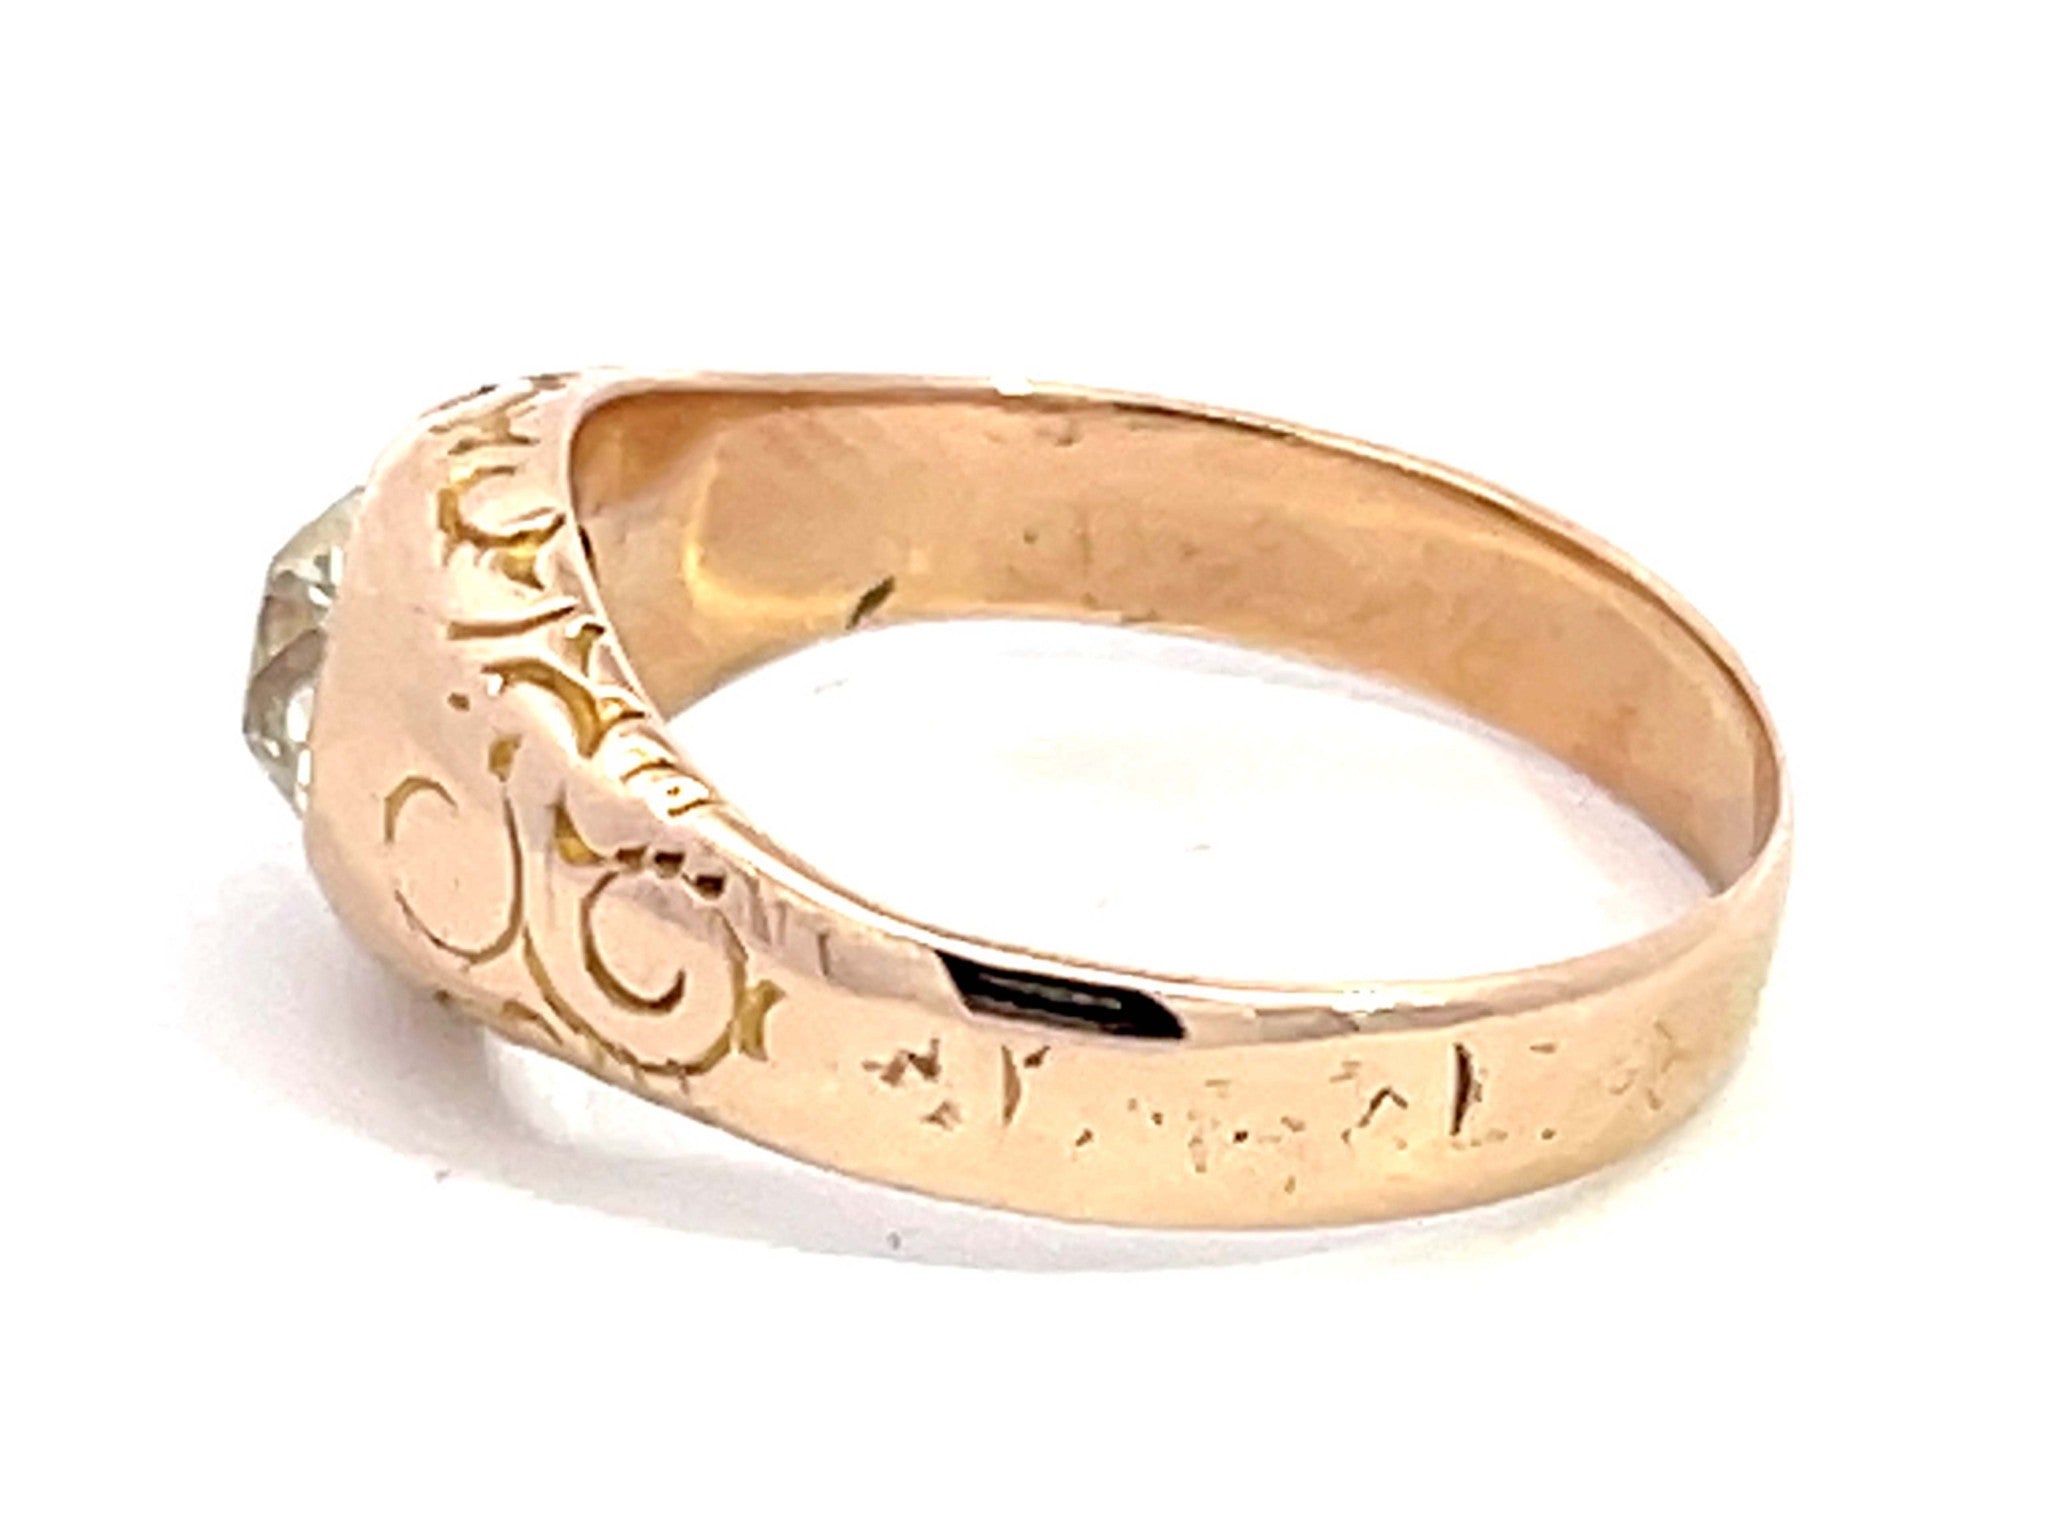 Georgian Old European Cut Diamond Gypsy Ring in 14k Pink Gold